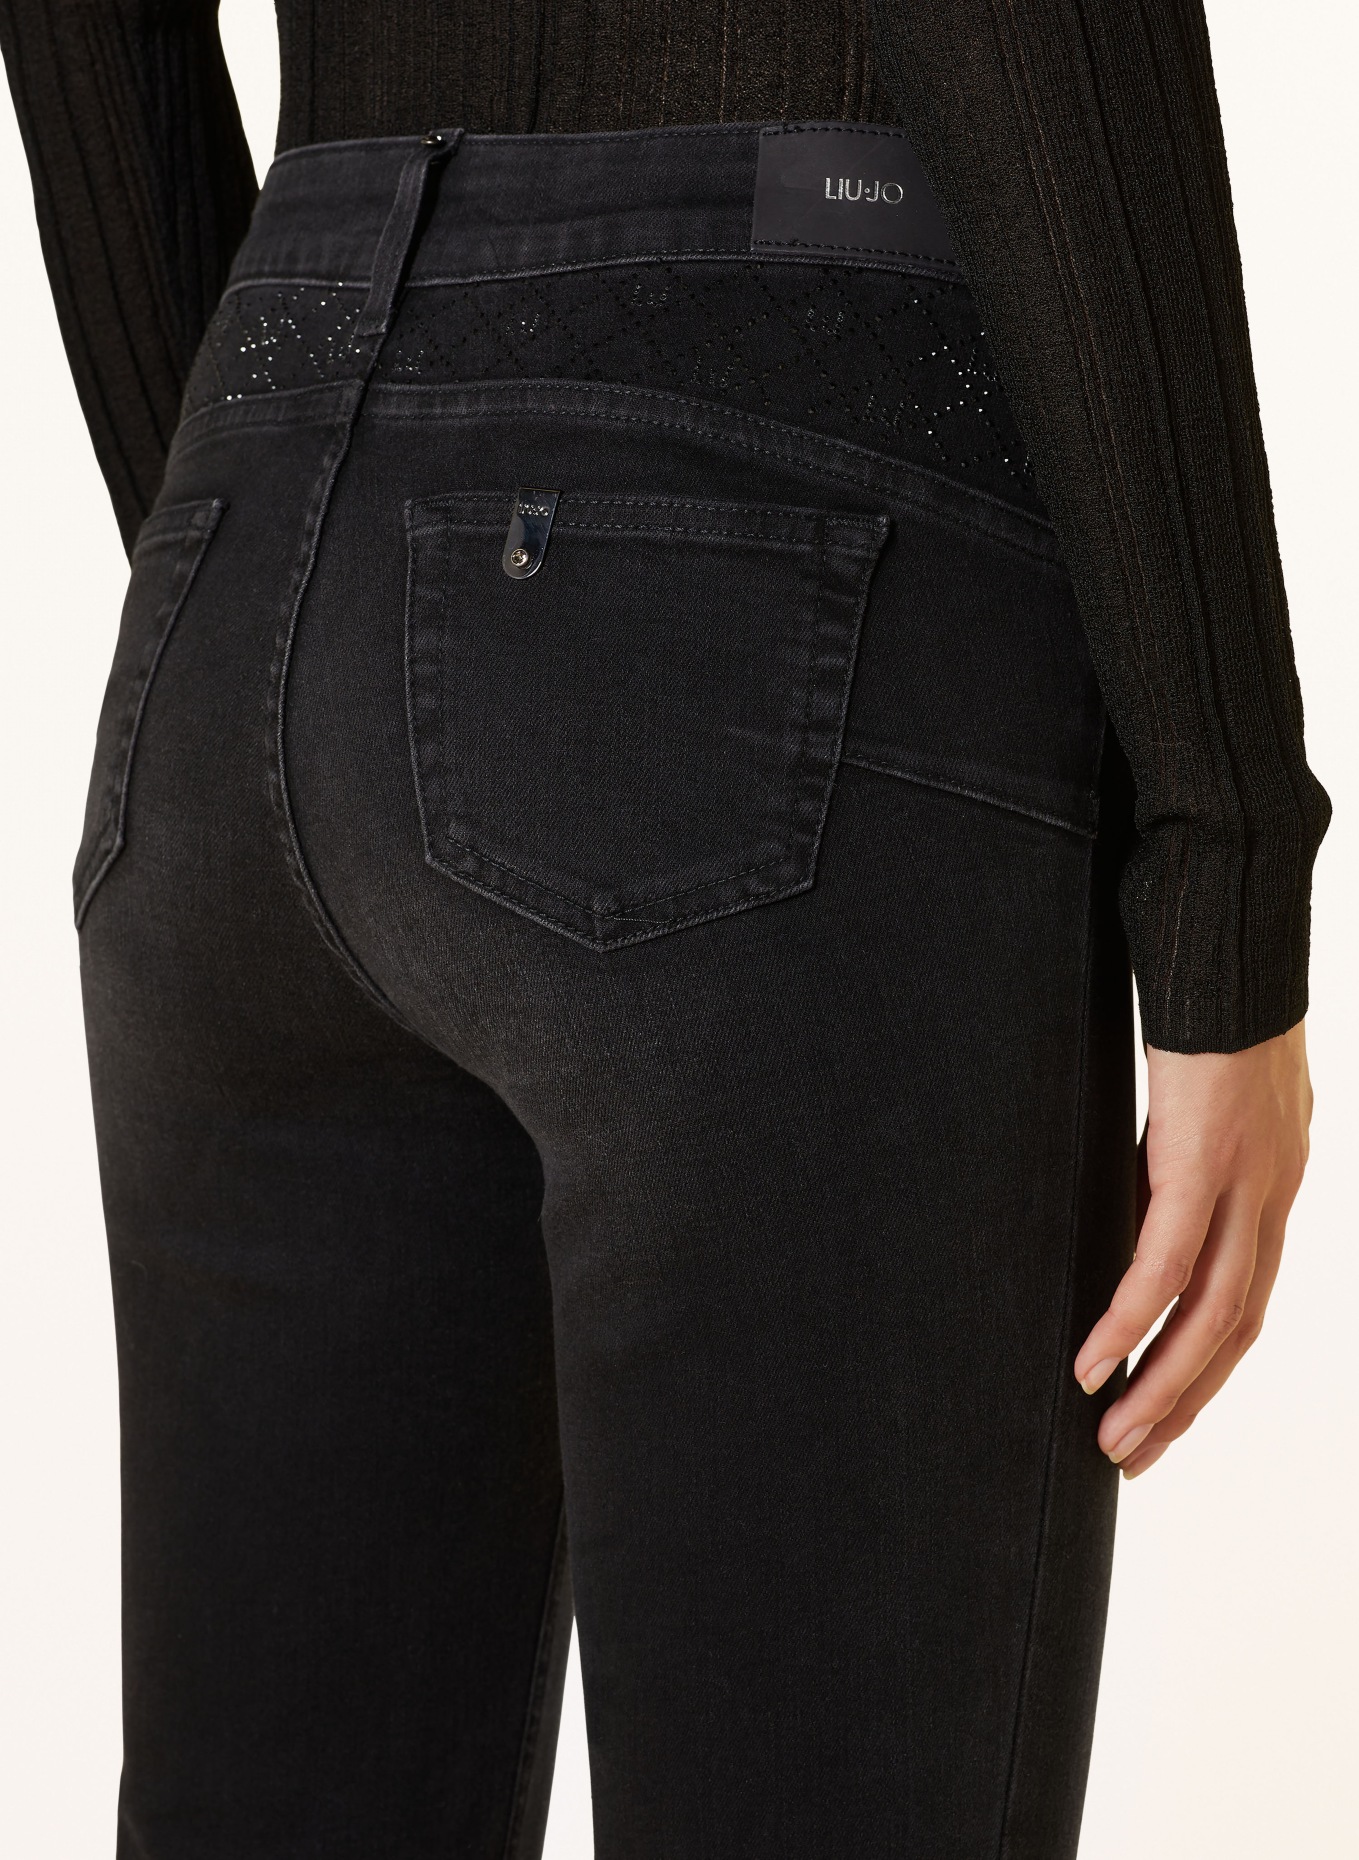 LIU JO Skinny jeans with decorative gems, Color: 87353 Den.Black winner was (Image 5)